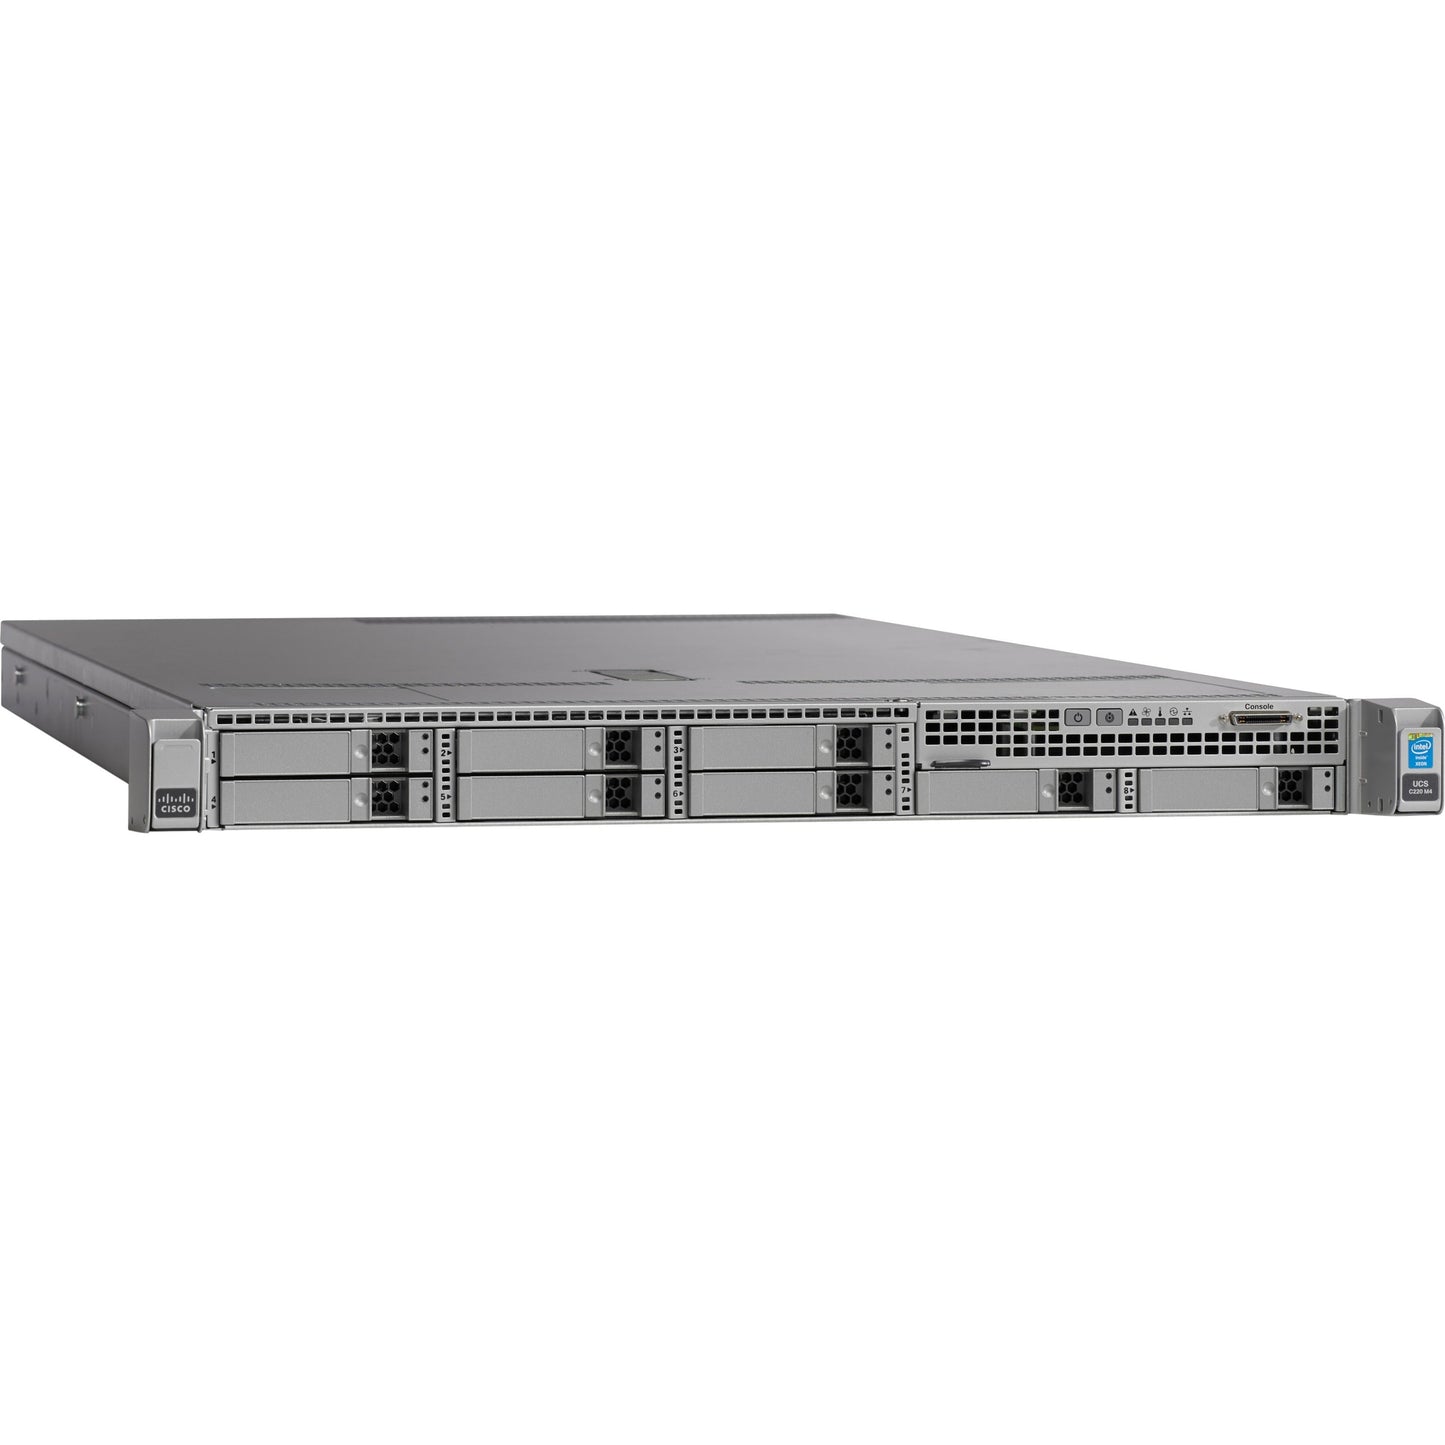 Cisco C220 M4 Rack Server - 2 x Intel Xeon E5-2670 v3 2.30 GHz - 128 GB RAM - 12Gb/s SAS Serial ATA Controller